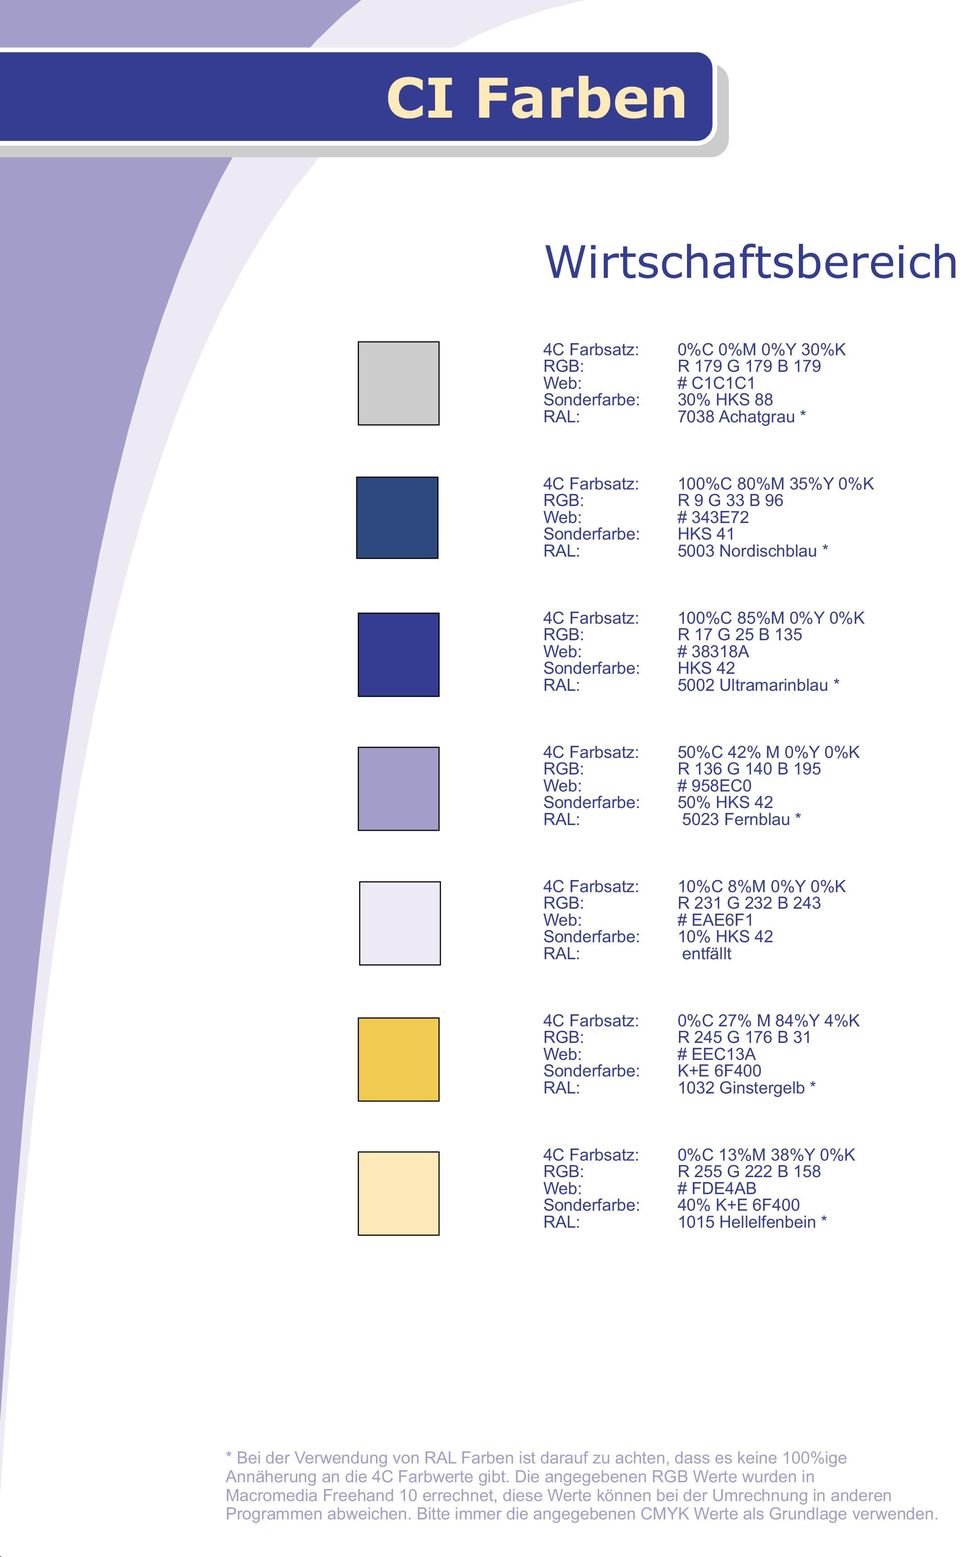 140 B 195 # 958EC0 Sonderfarbe: 50% HKS 42 RAL: 5023 Fernblau * 4C Farbsatz: 10%C 8%M 0%Y 0%K RGB: R 231 G 232 B 243 # EAE6F1 Sonderfarbe: 10% HKS 42 RAL: entfällt 4C Farbsatz: 0%C 27% M 84%Y 4%K